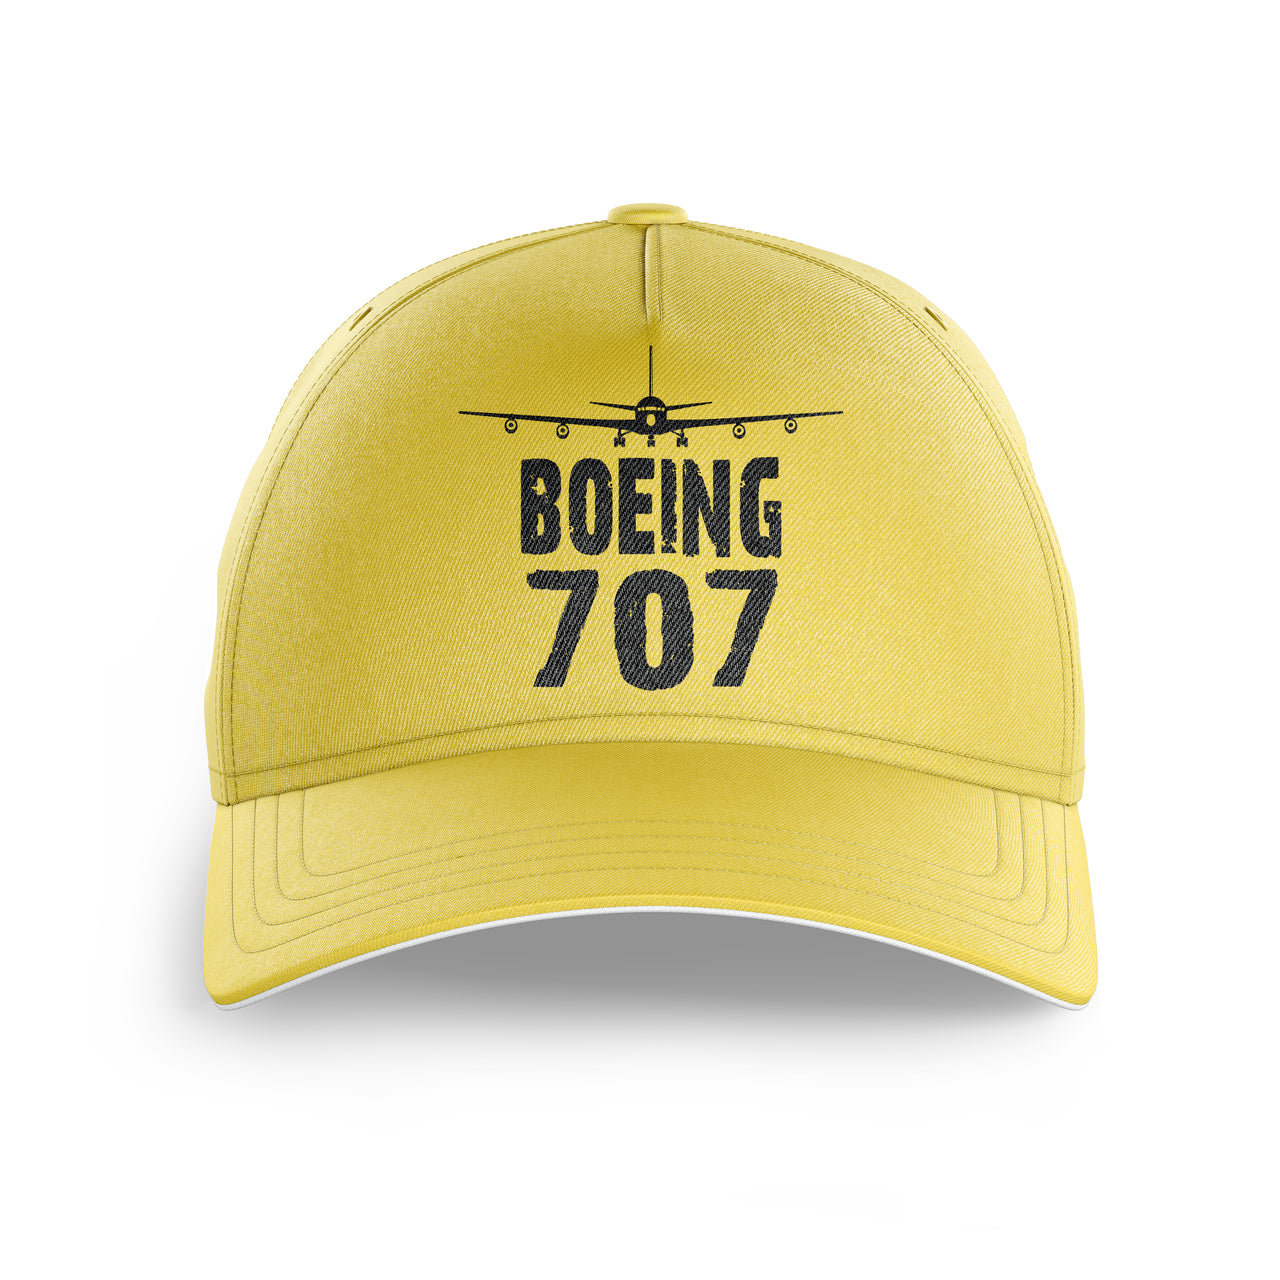 Boeing 707 & Plane Printed Hats